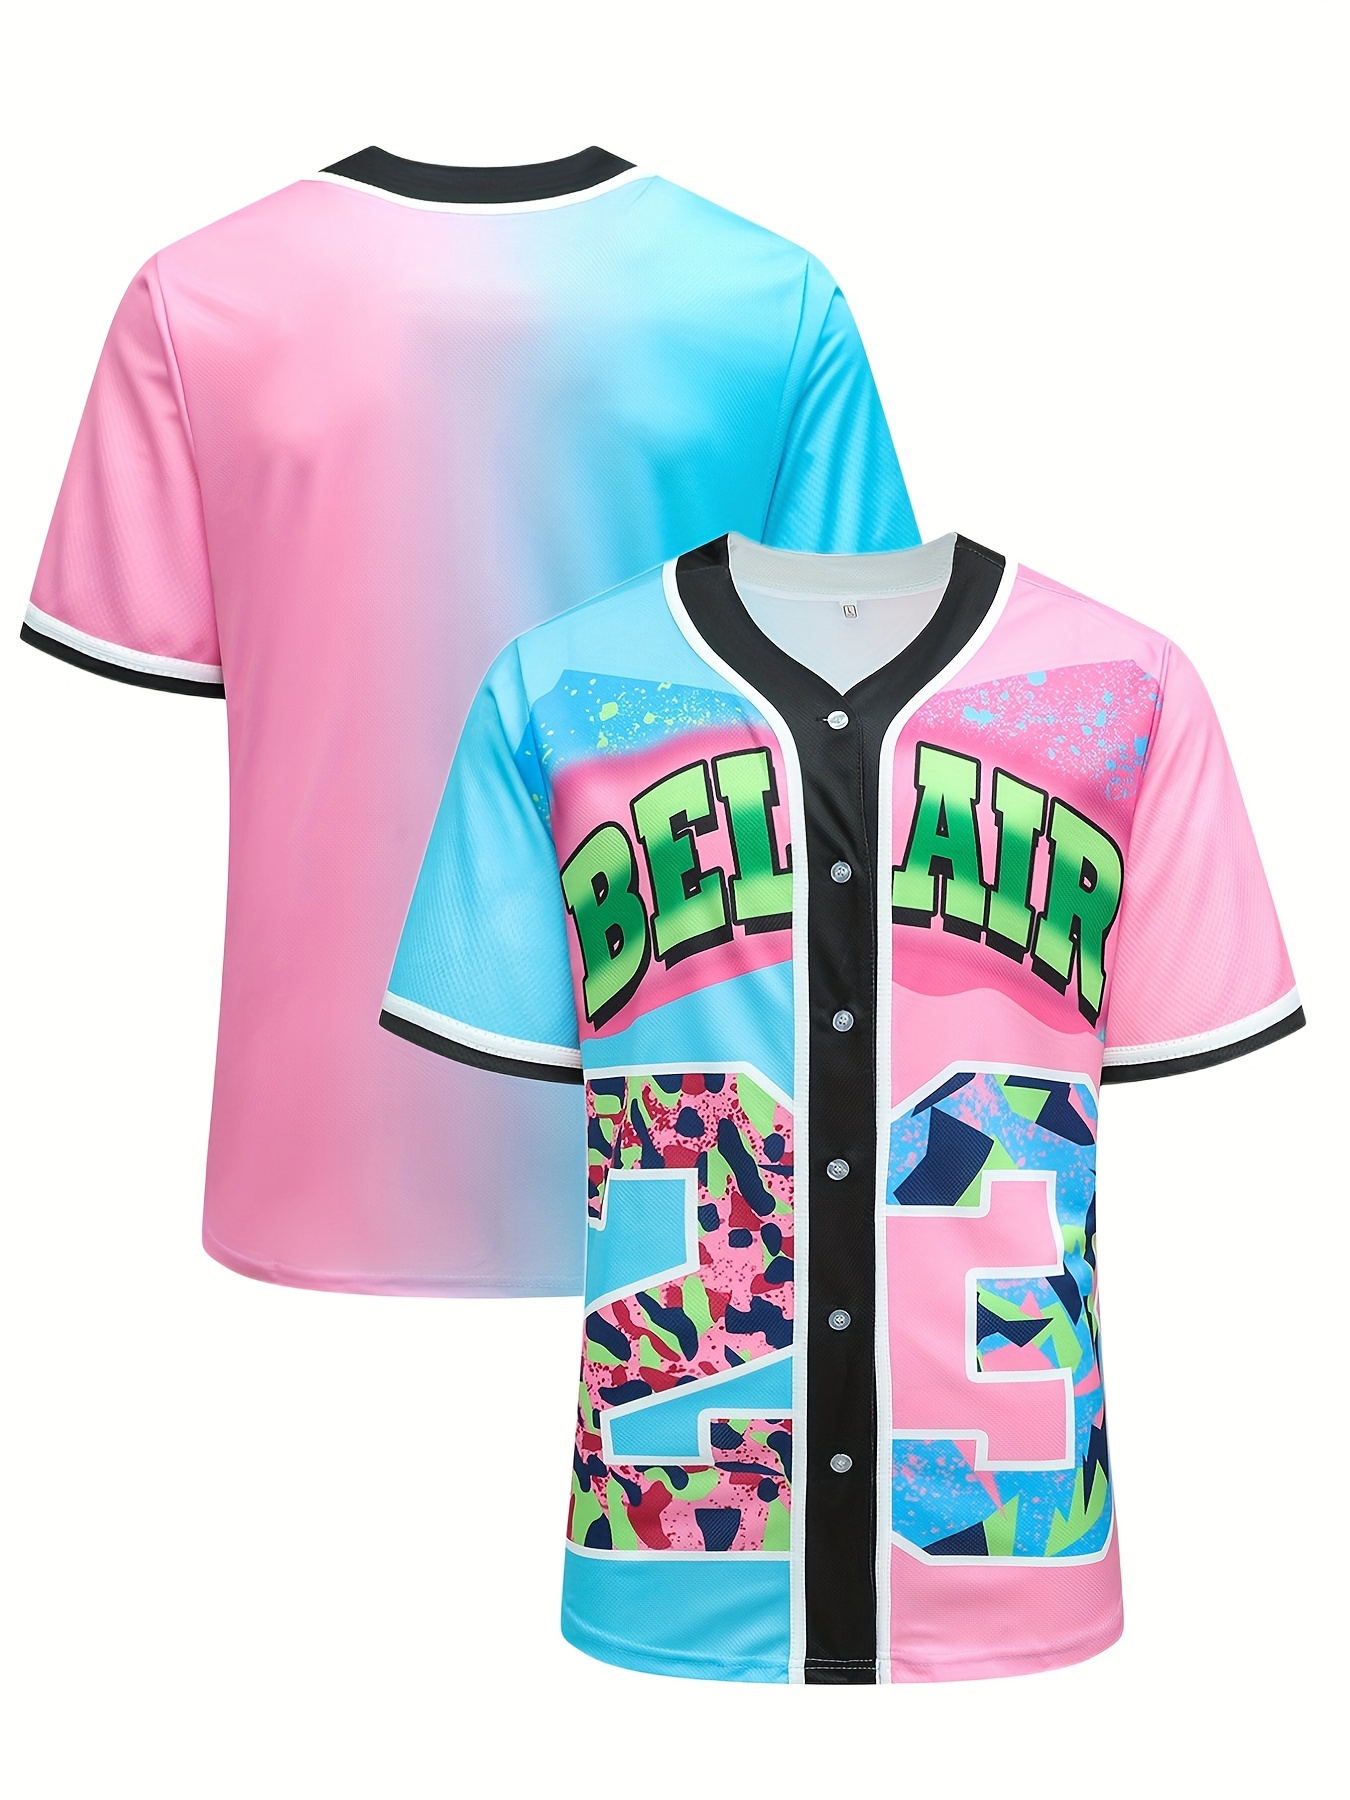 Baseball jersey outfit, Baseball jersey outfit women, Baseball shirt outfit